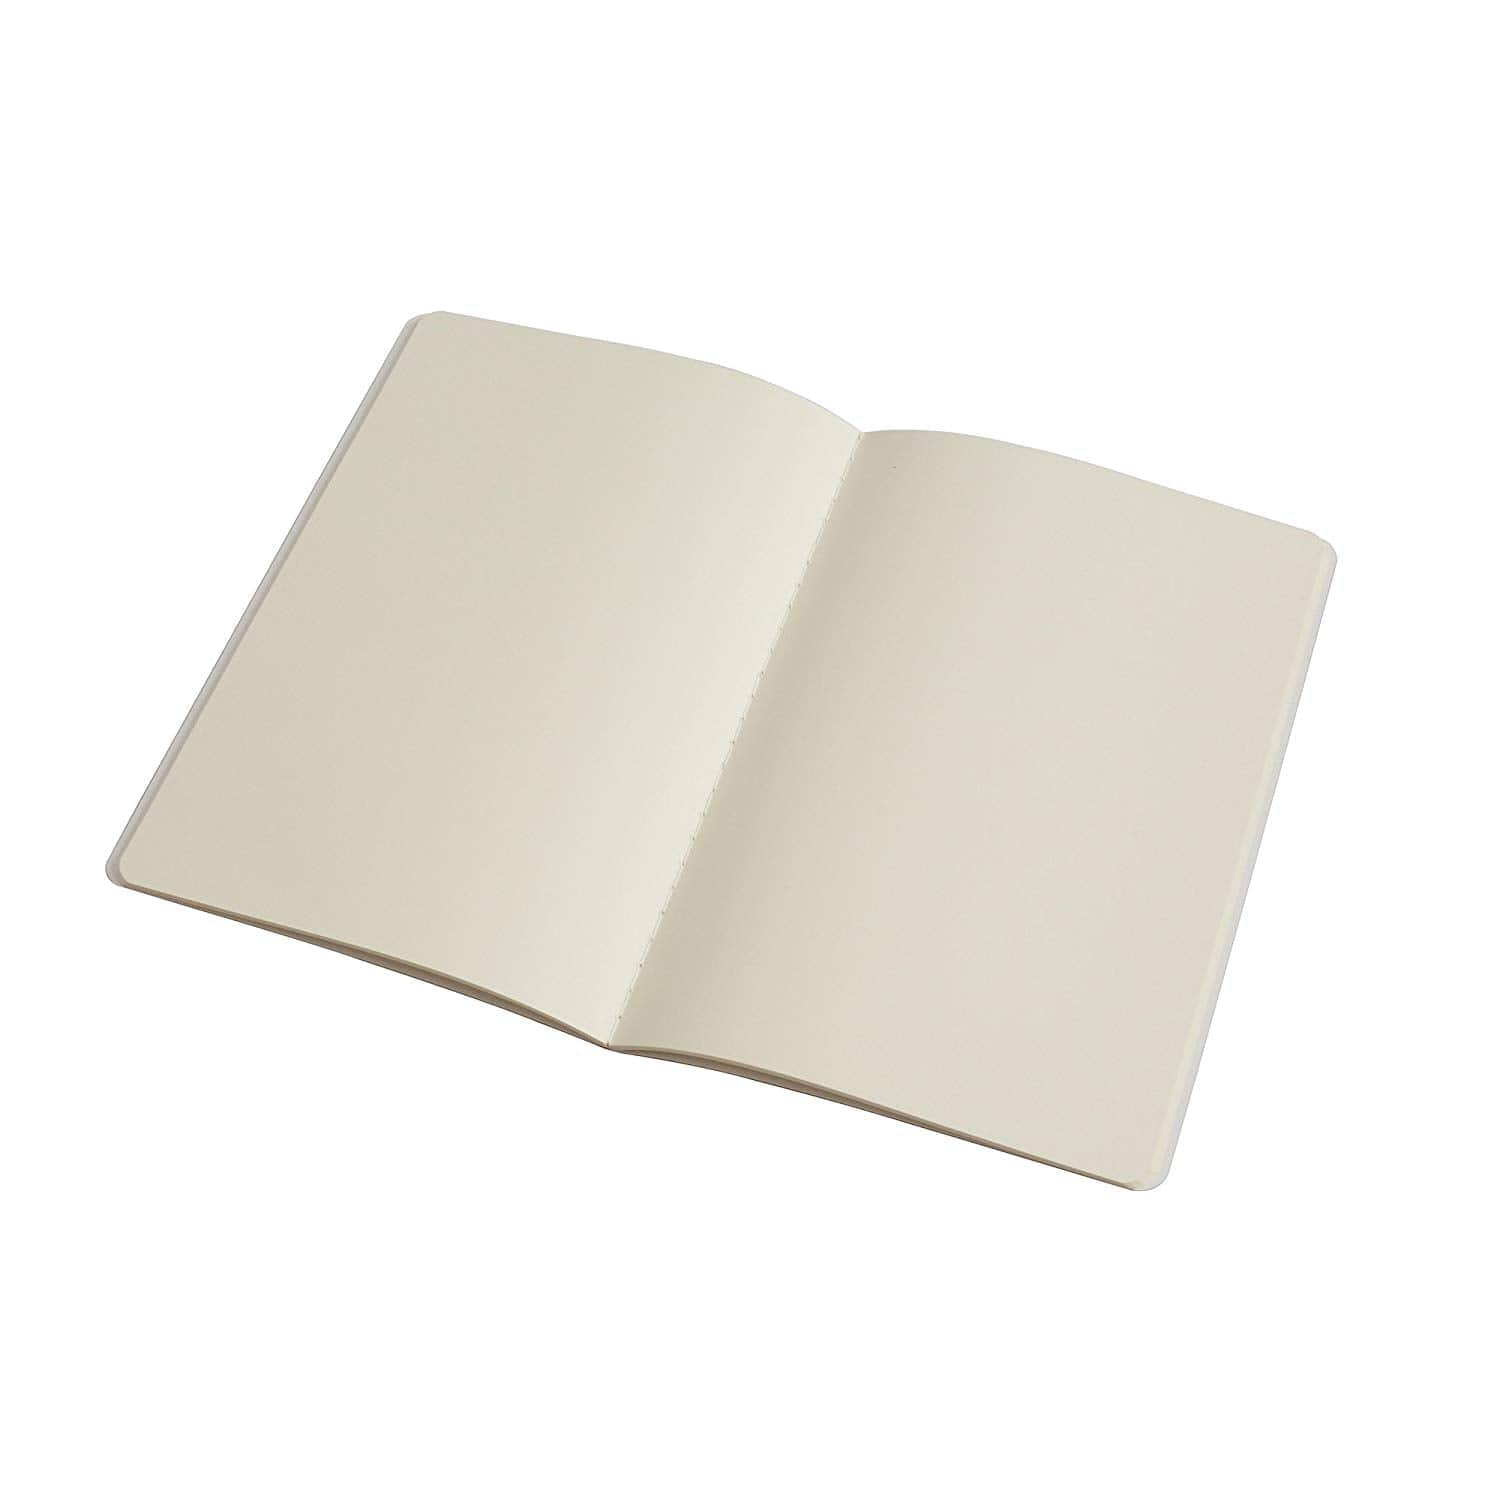 PinkPolish Design Notebook "Hiding" Mental Health Inspired Notebook / Sketchbook / Journal